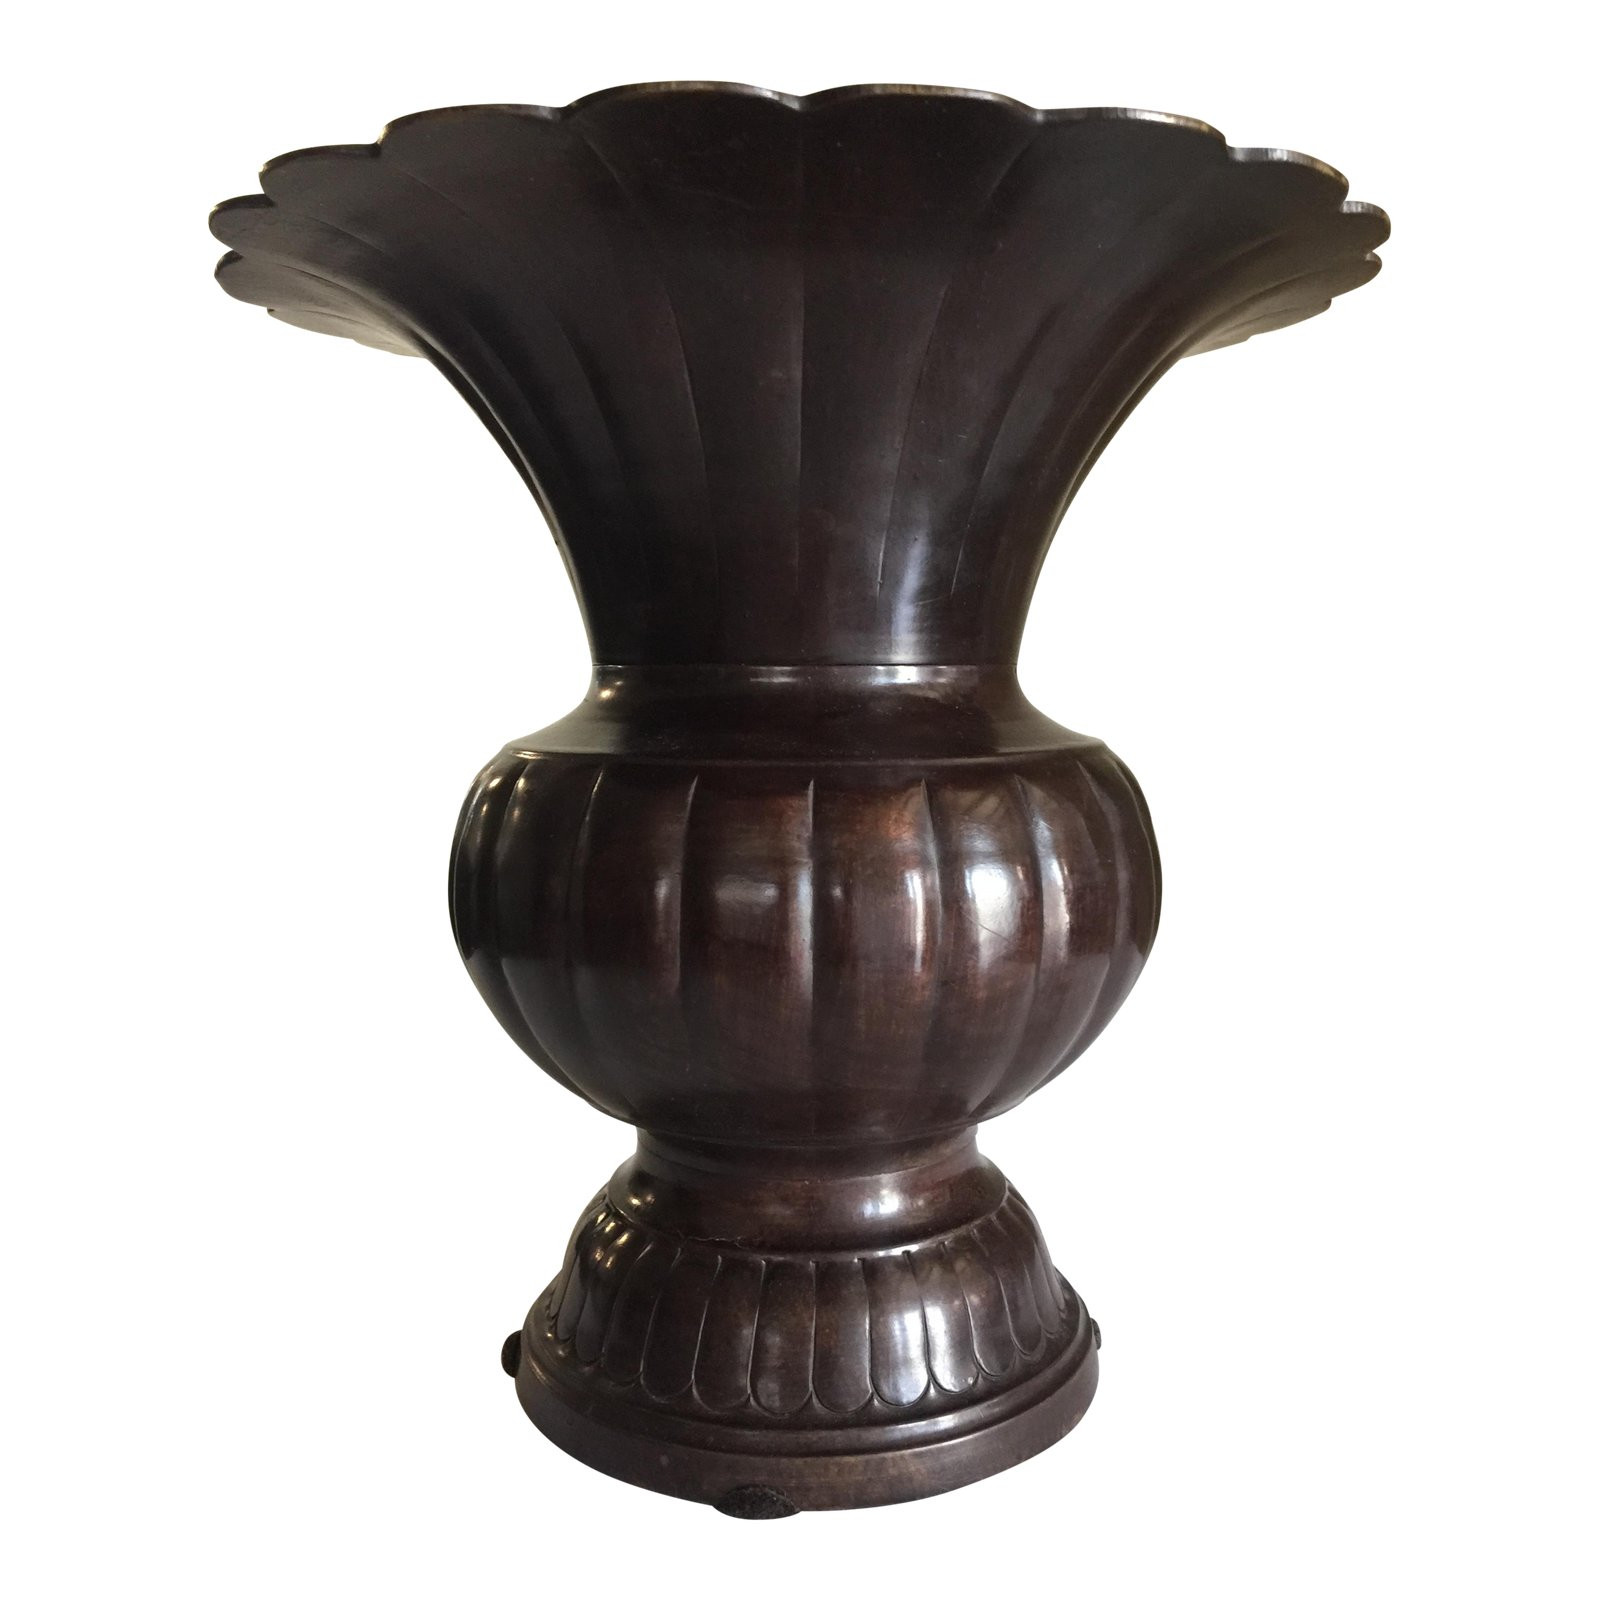 16 Famous Maitland Smith Ltd Vase 2024 free download maitland smith ltd vase of maitland smith bronze lotus vase chairish pertaining to maitland smith bronze lotus vase 7594